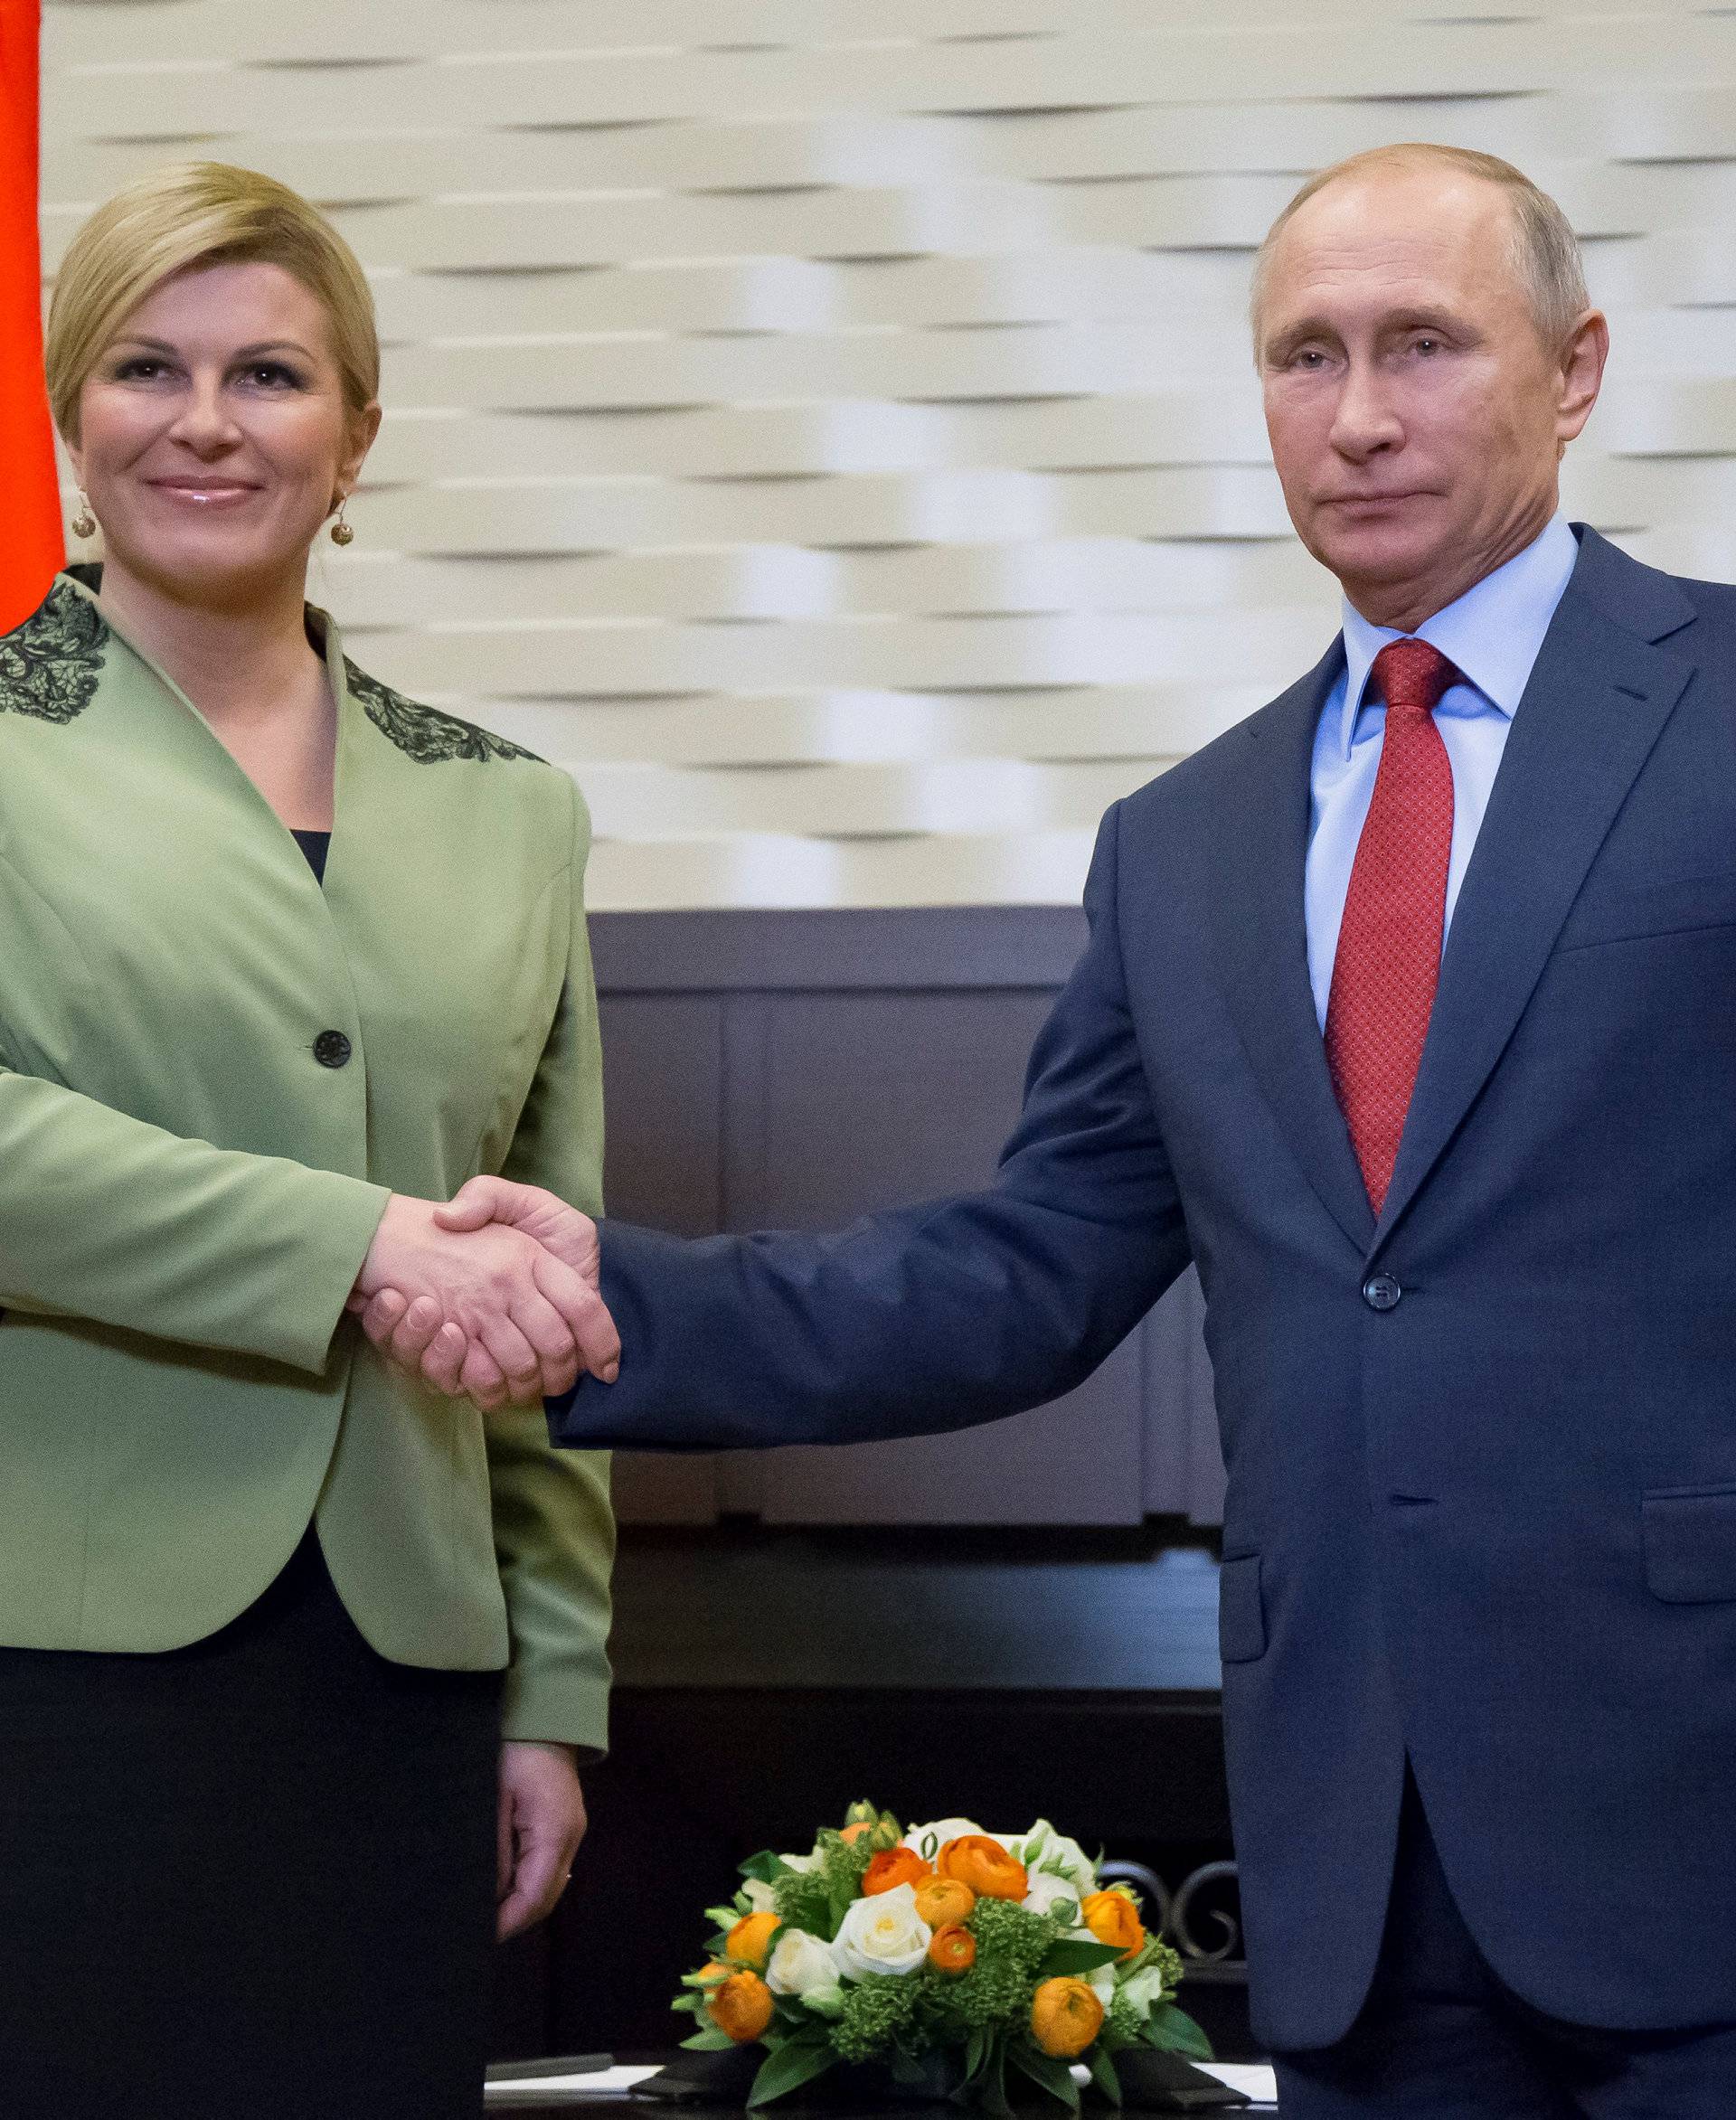 Putin shakes hands with Croatian President Kolinda Grabar-Kitarovic during their meeting in Sochi